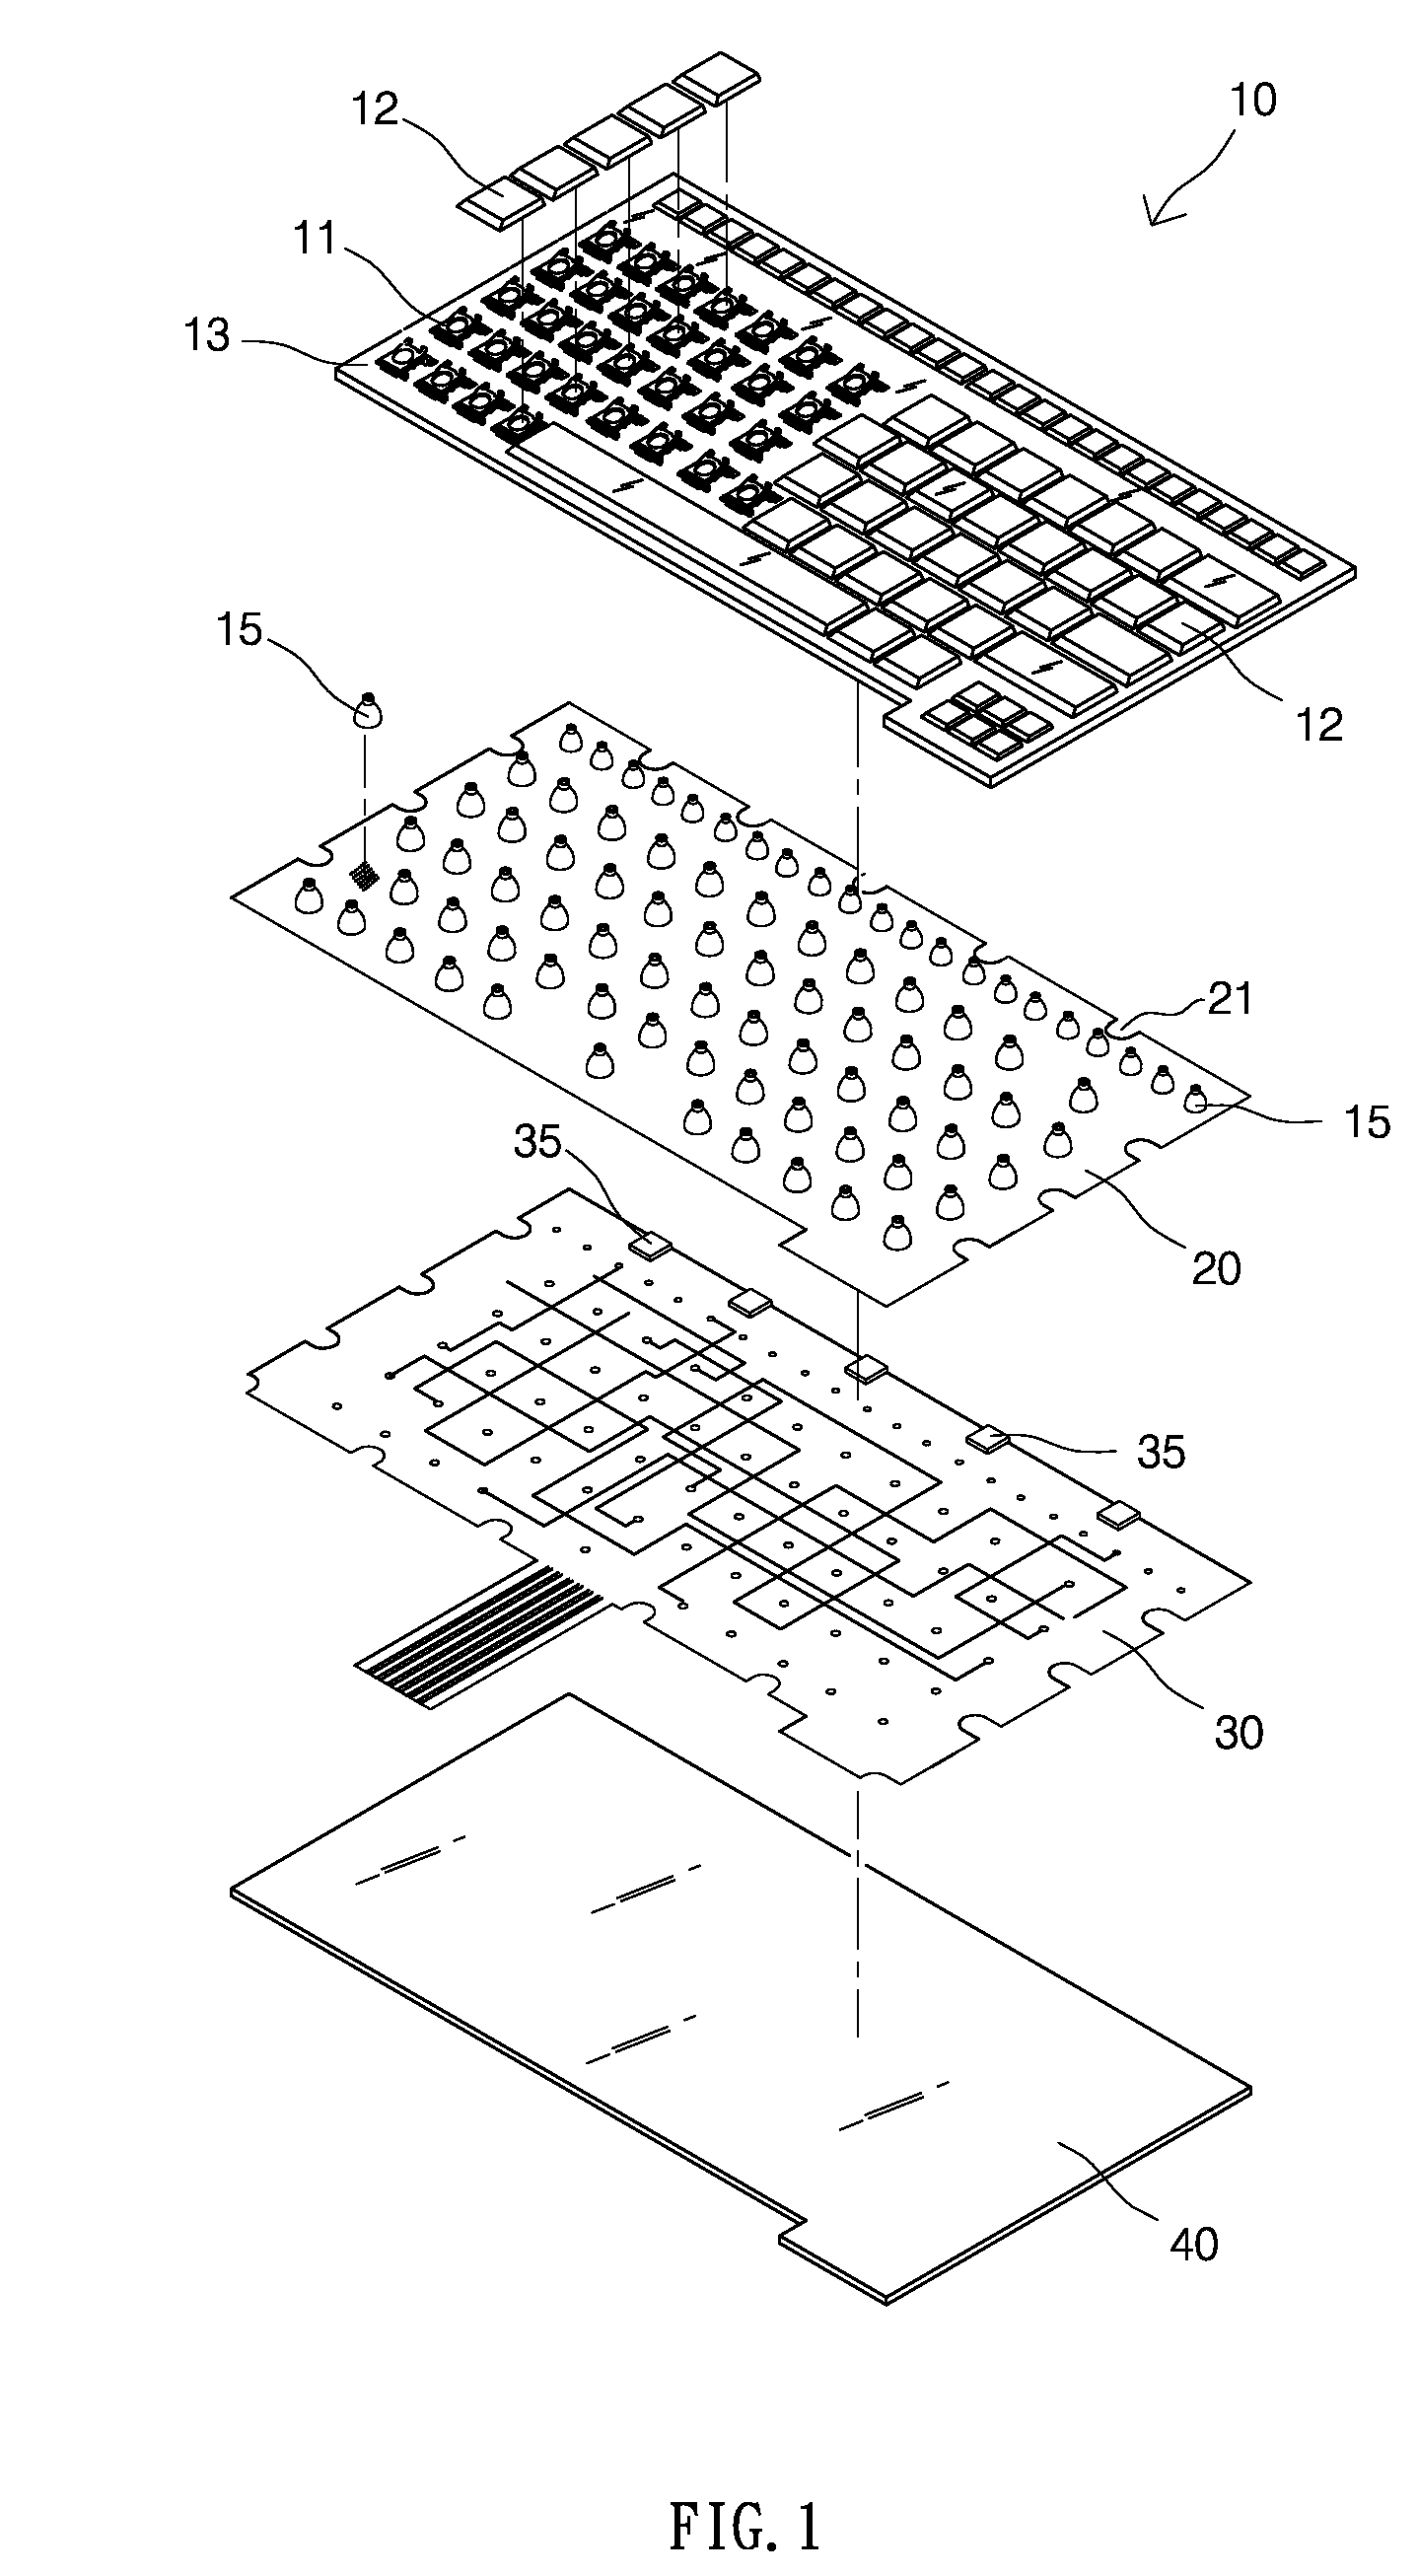 Membrane keyboard/keypad with arrangement for uniformly lighting keys from background